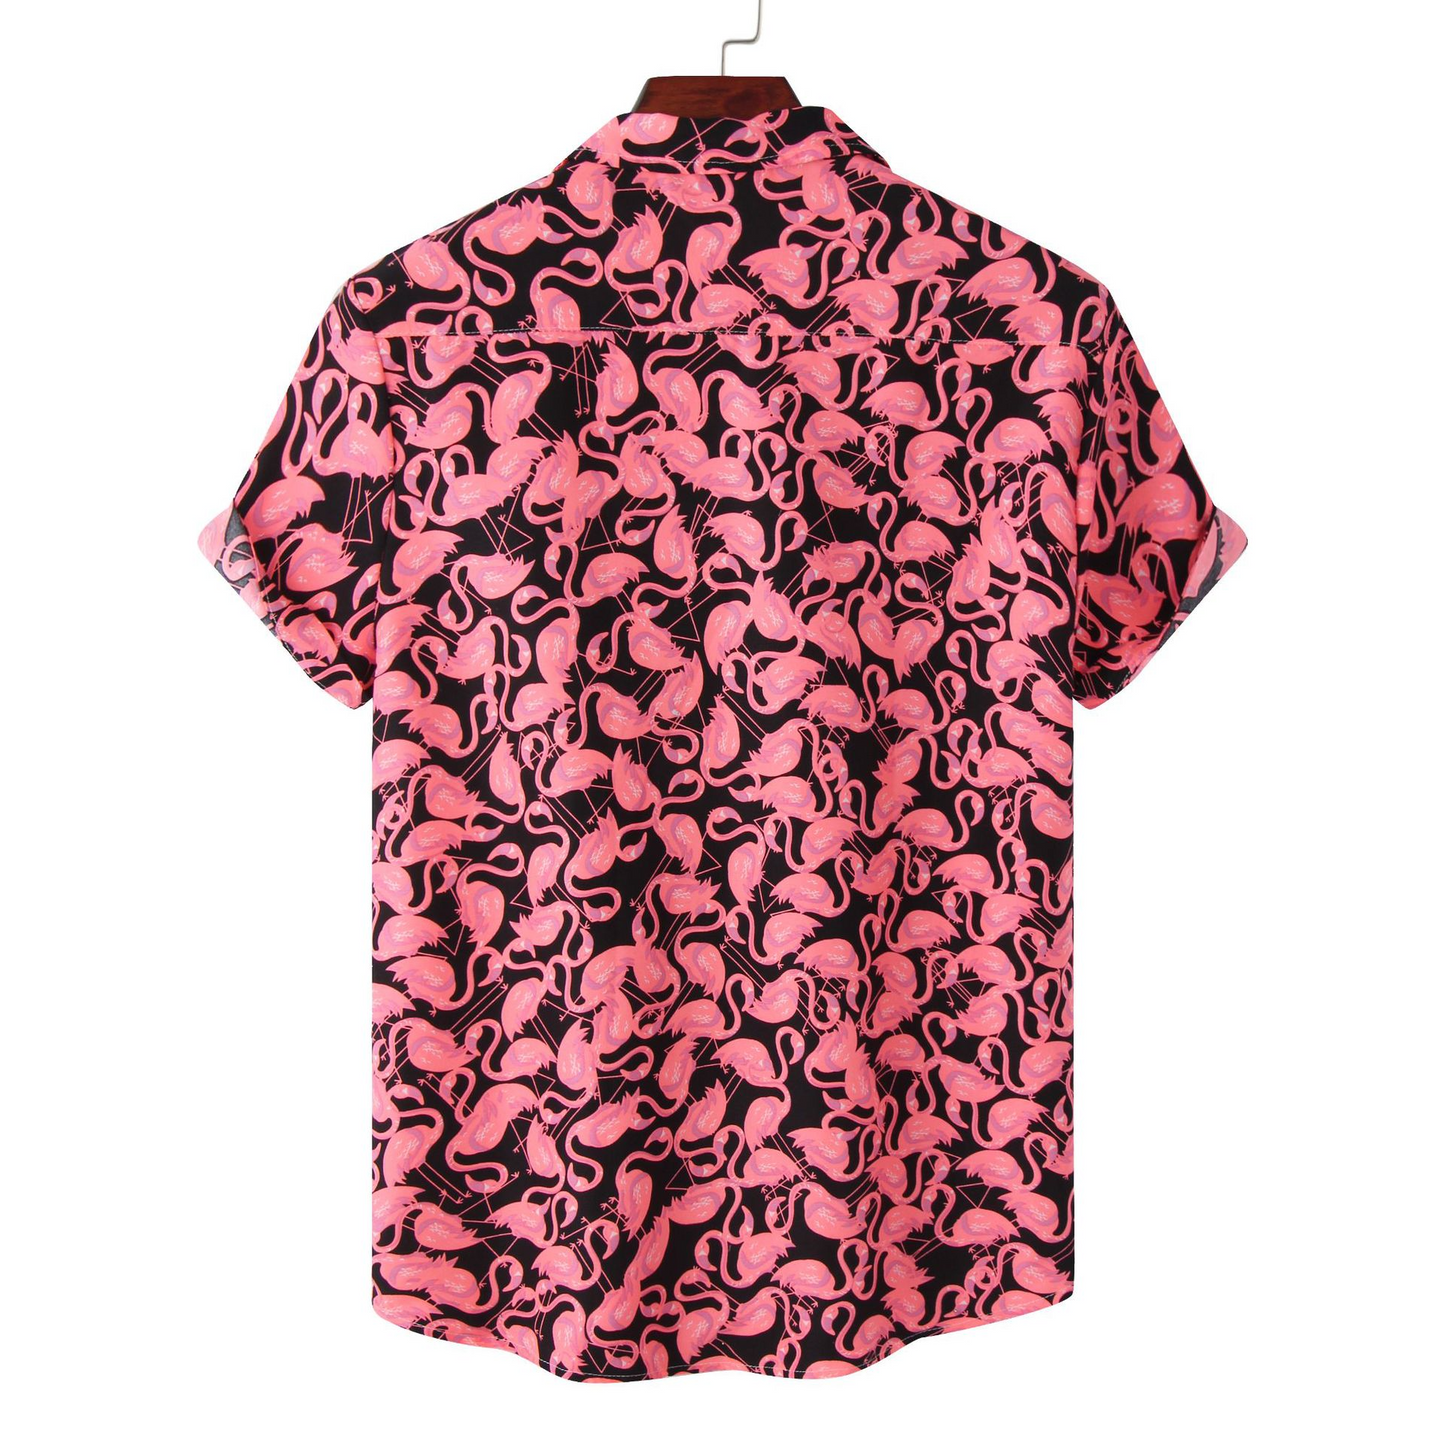 Men's Cool Beach Shirts with Flamingo Prints